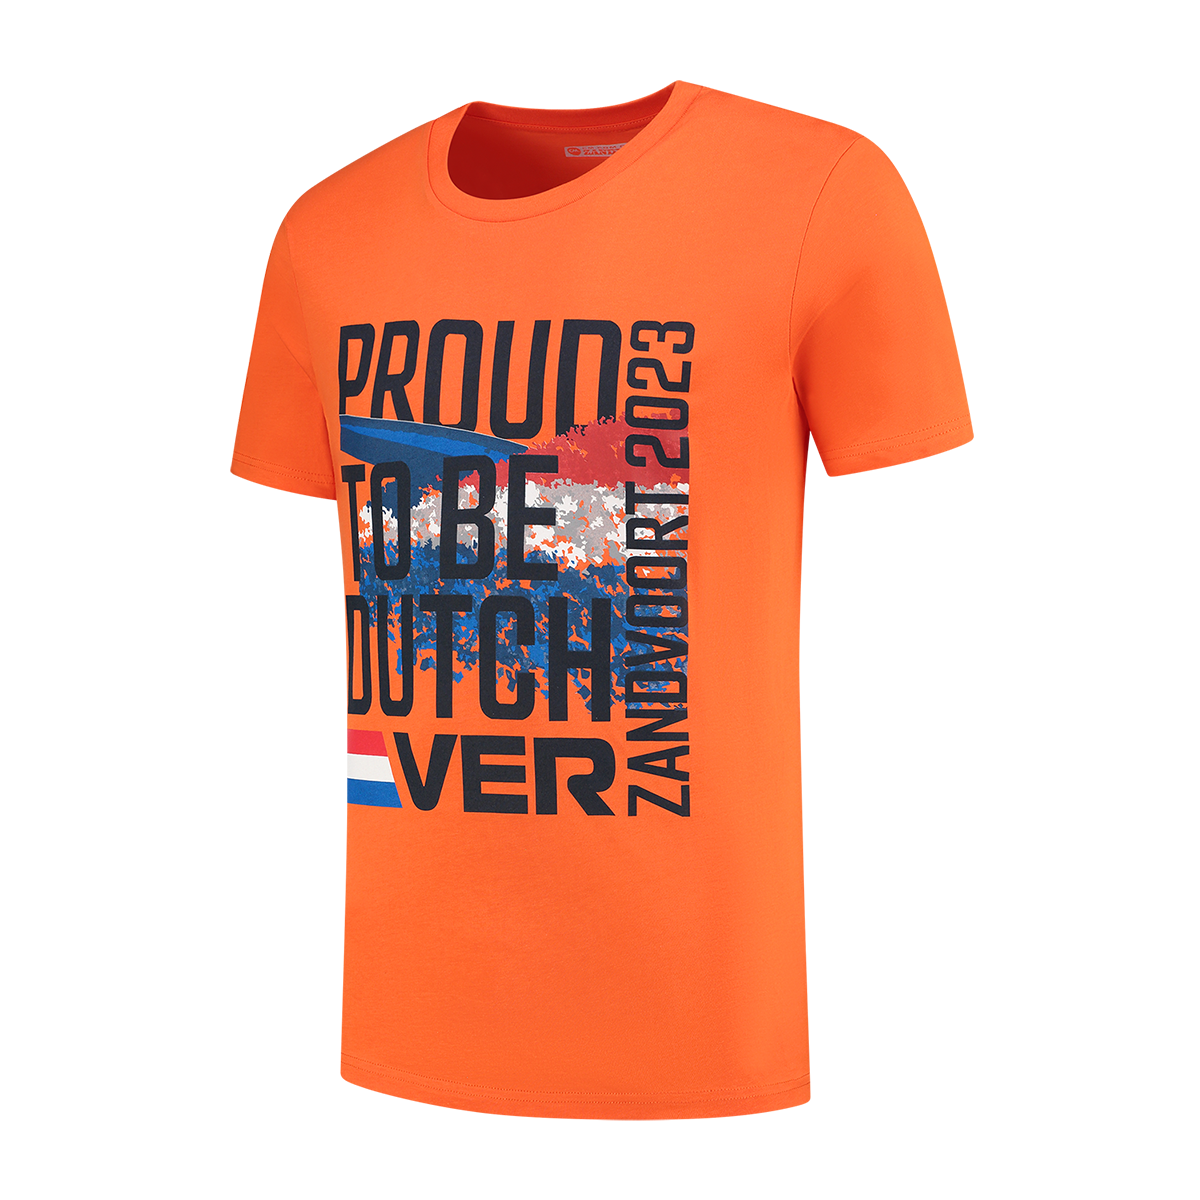 Proud to be Dutch - T-shirt Oranje - M - Max Verstappen